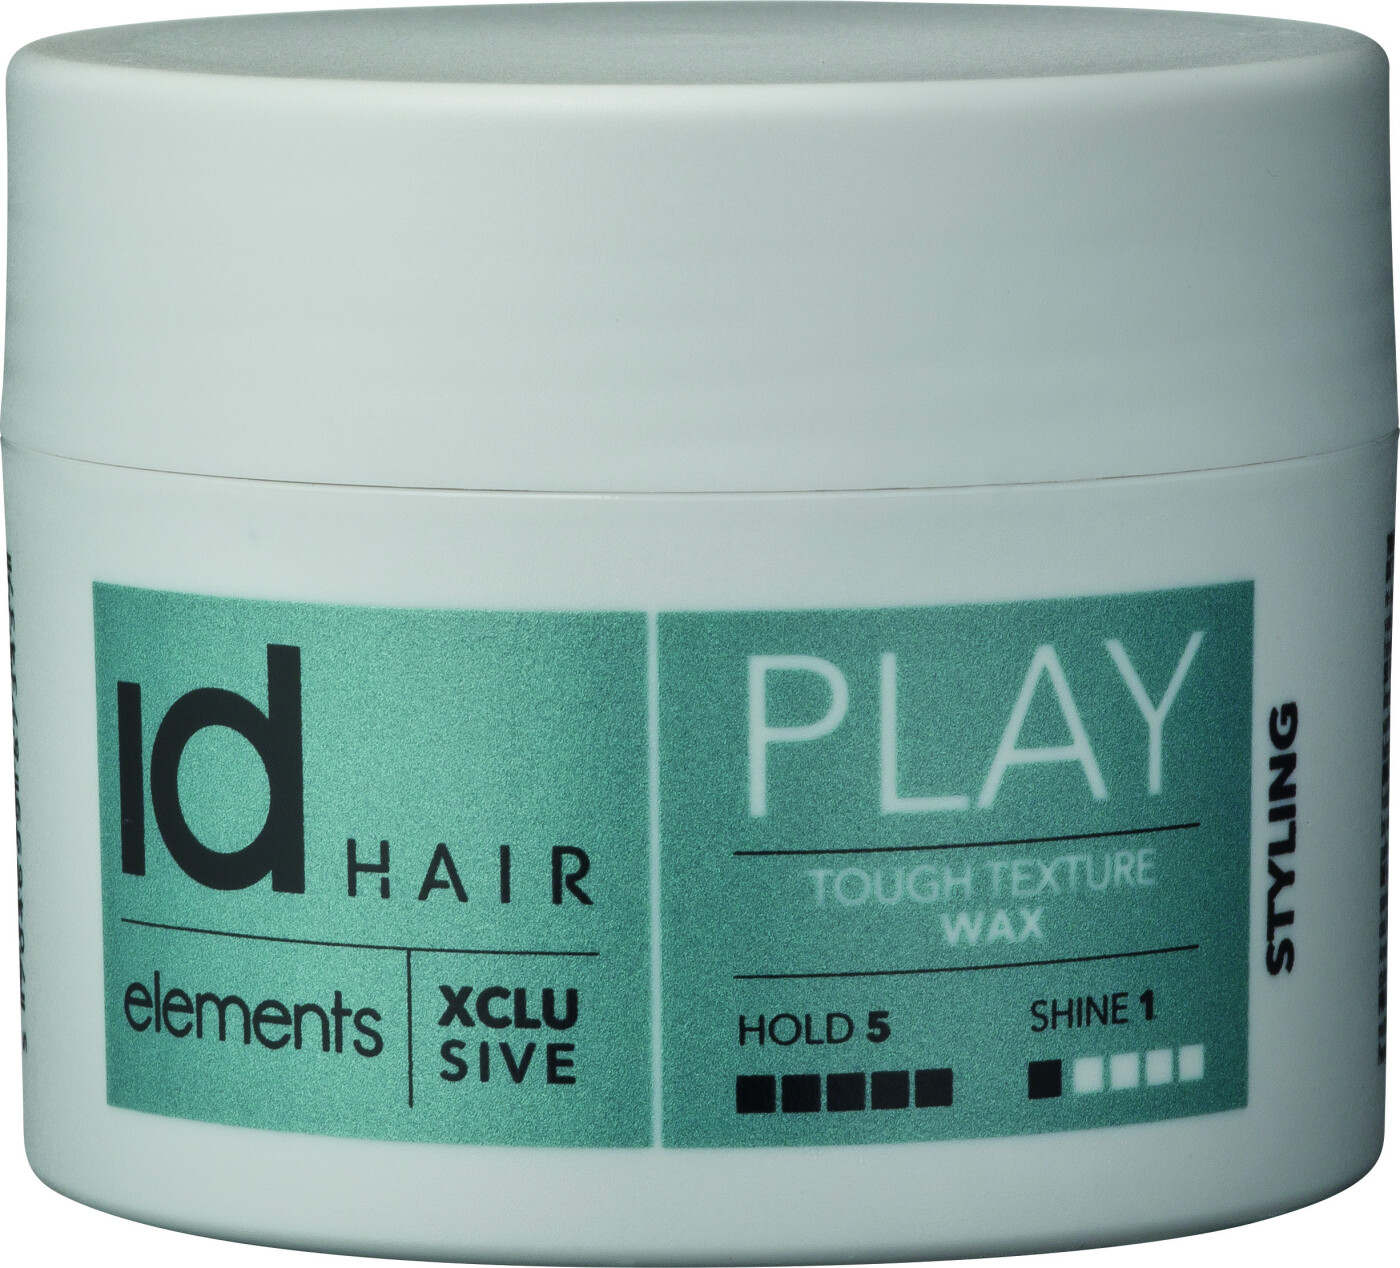 Billede af Id Hair - Elements Xclusive Texture Wax 100 Ml hos Gucca.dk